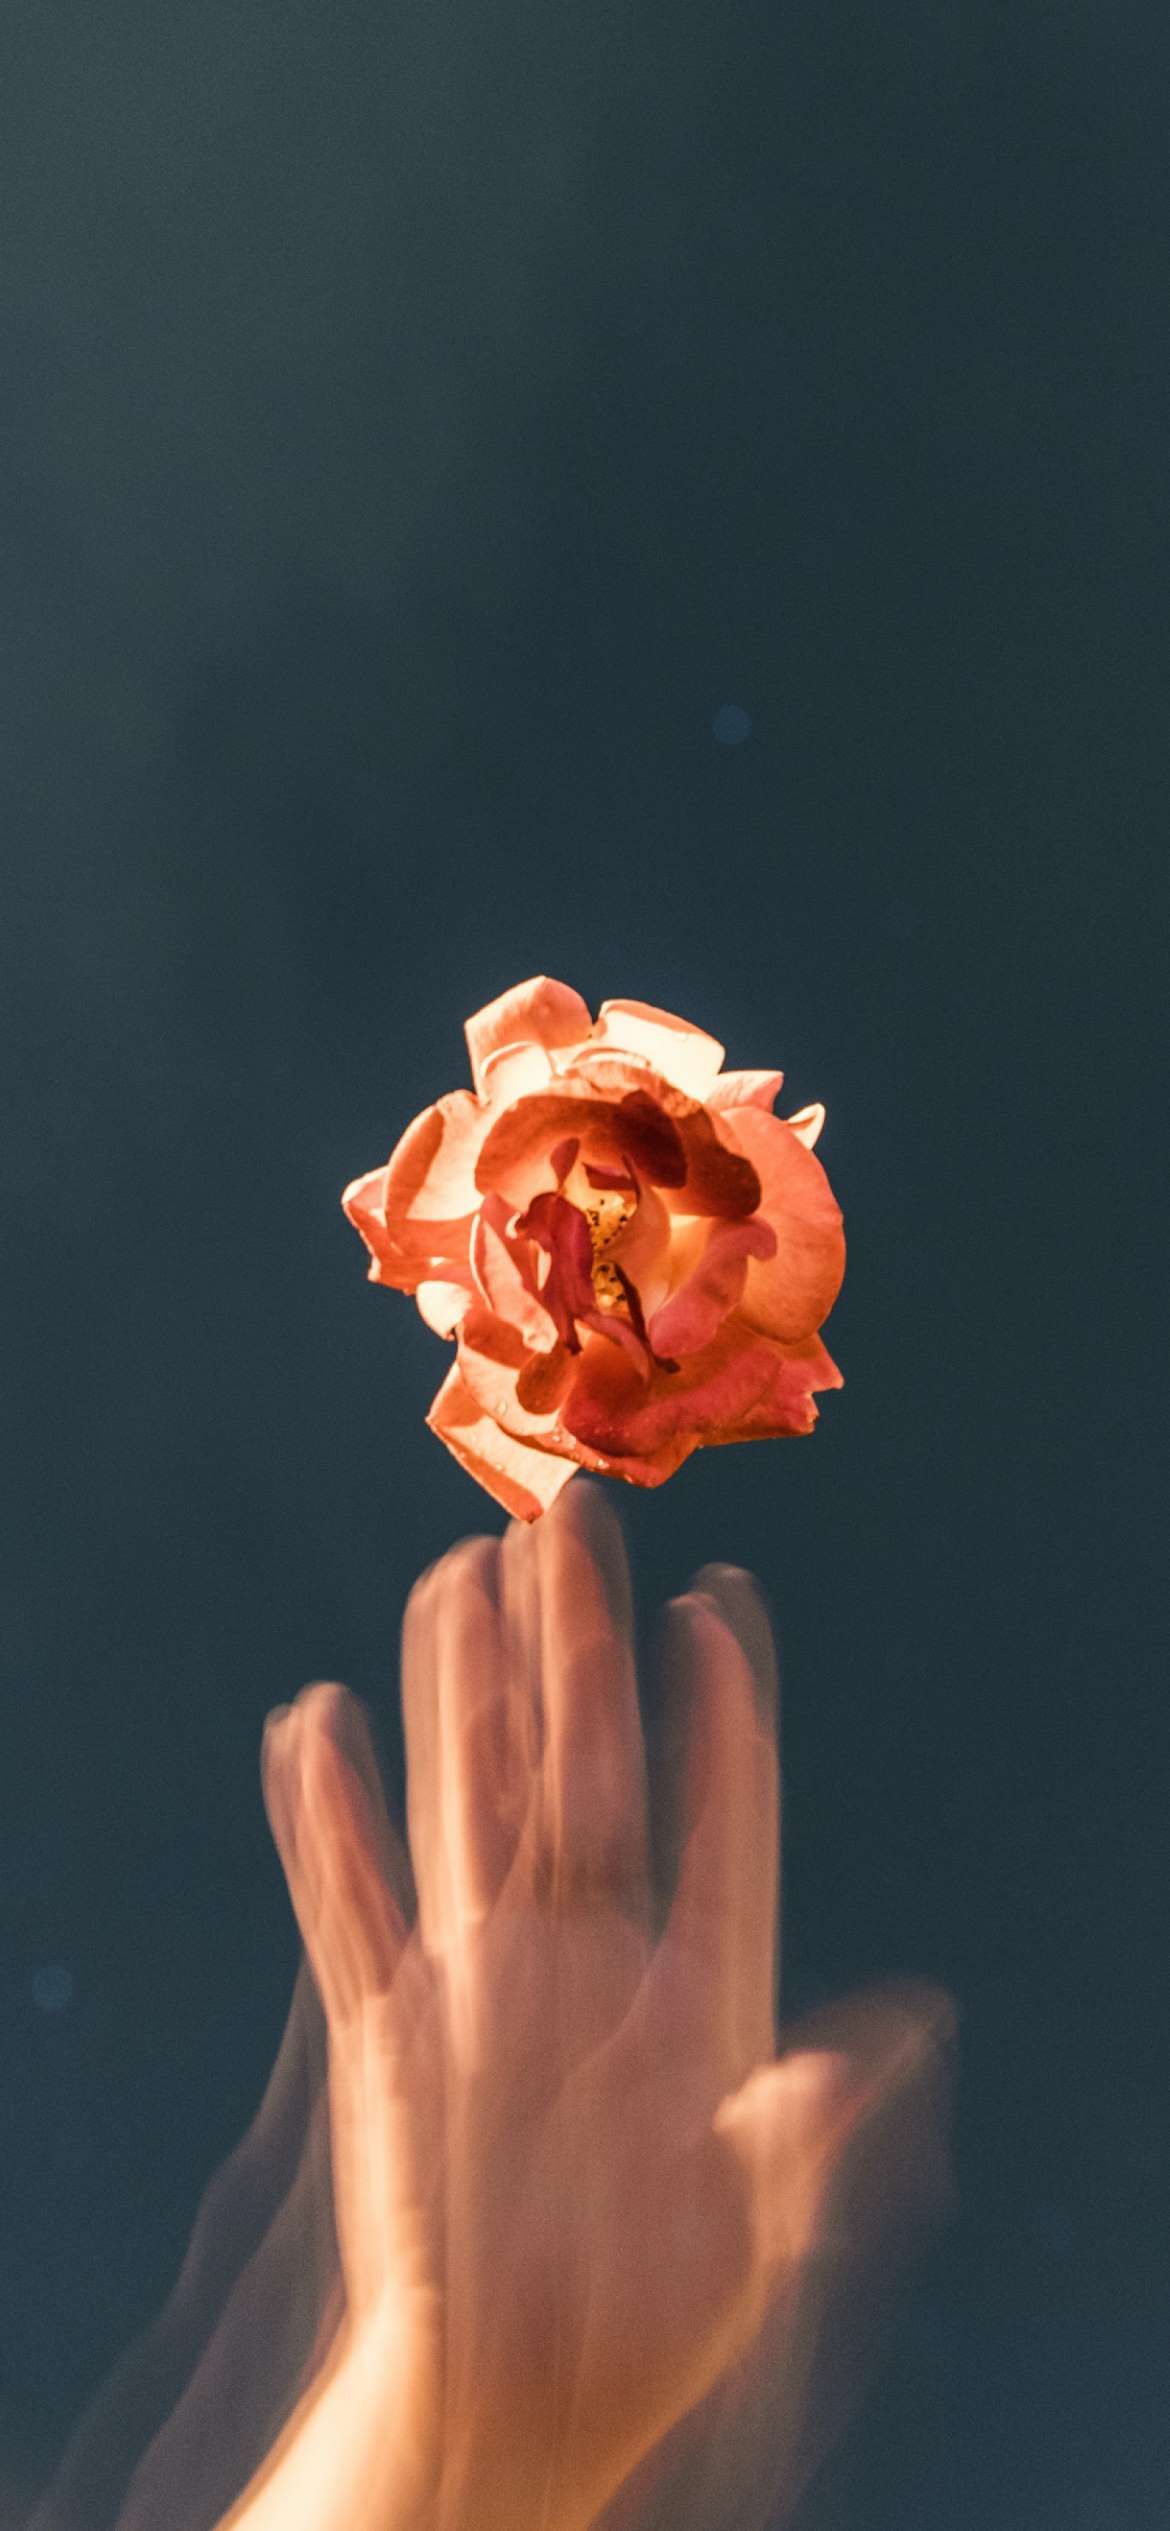 A hand holding an orange flower over water - Valentine's Day